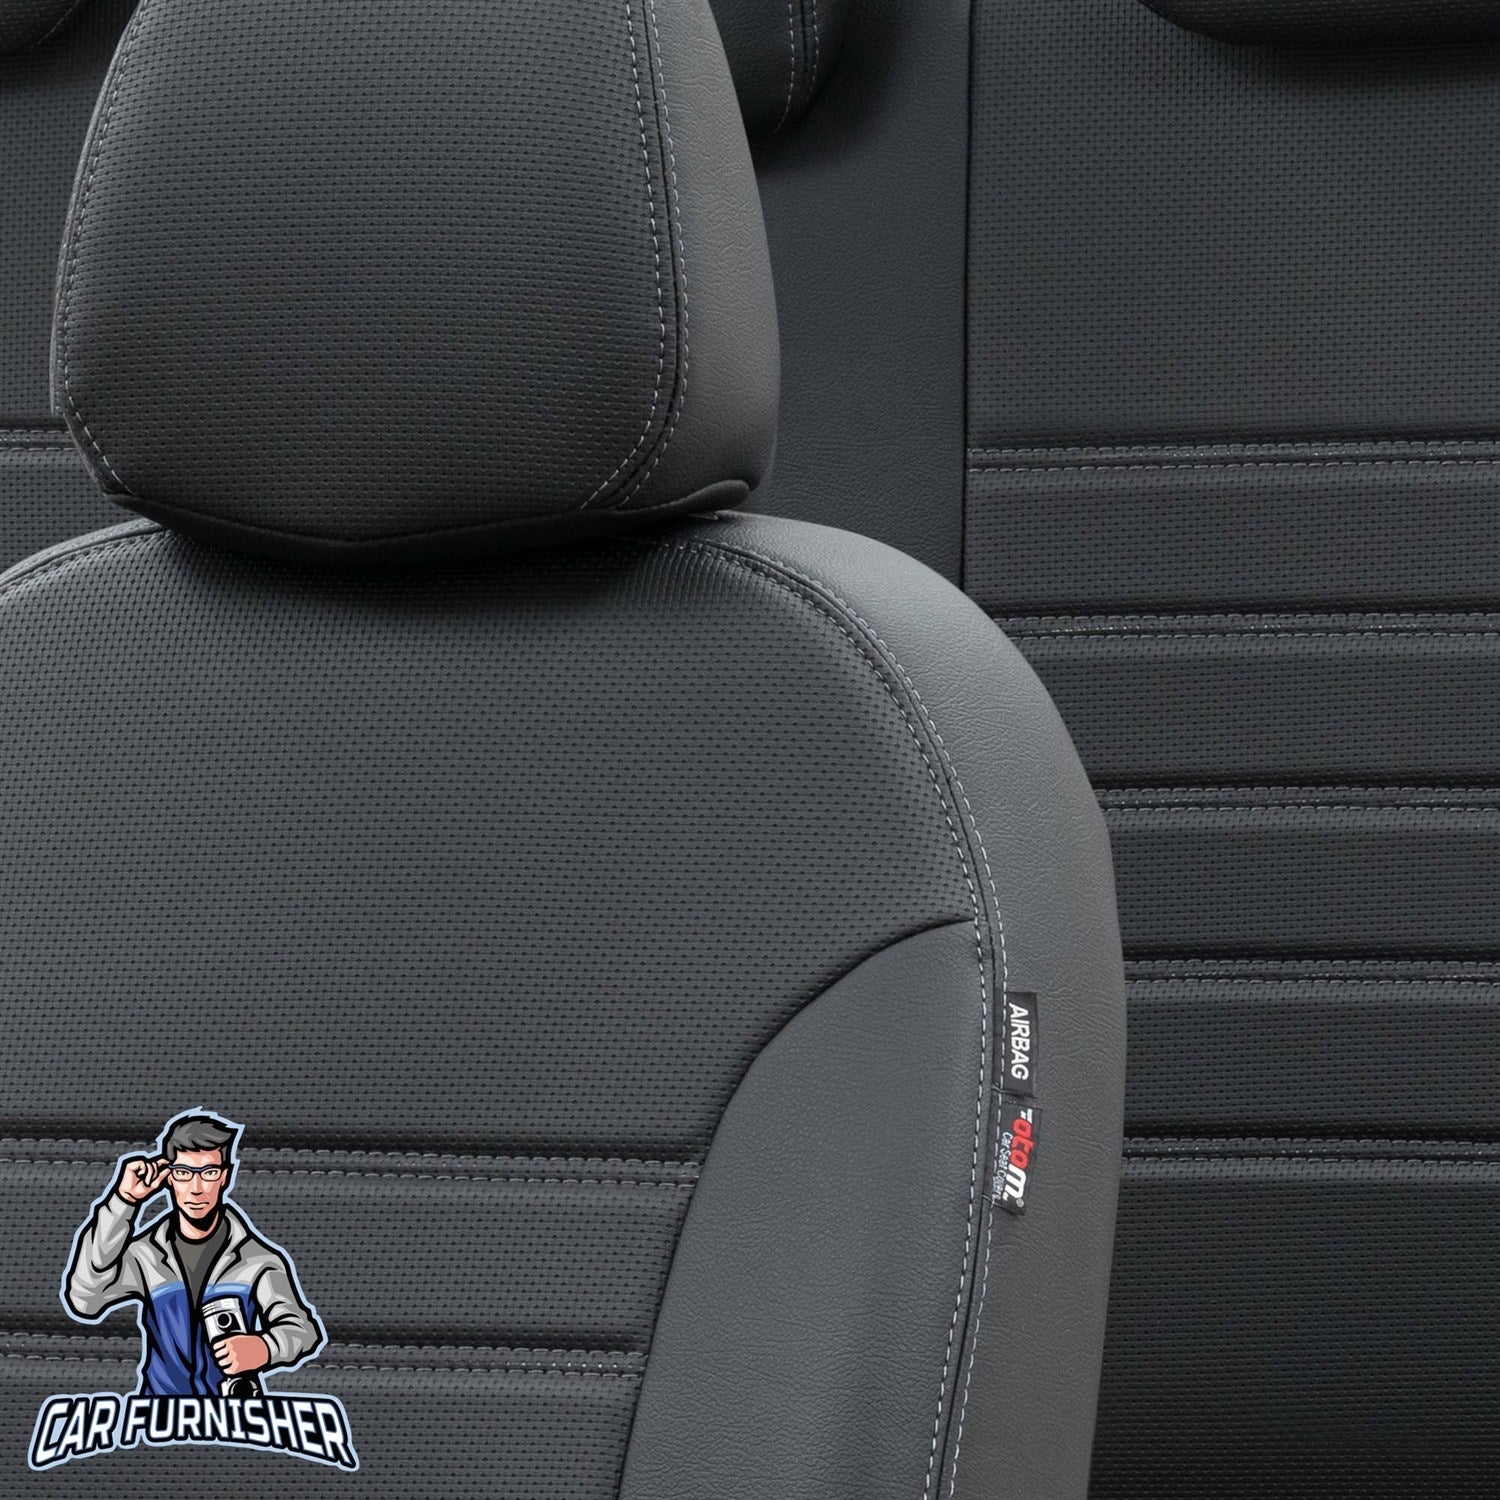 Fiat 500 Car Seat Covers 2009-2023 C/L/X New York Design Black Full Set (5 Seats + Handrest) Leather & Fabric